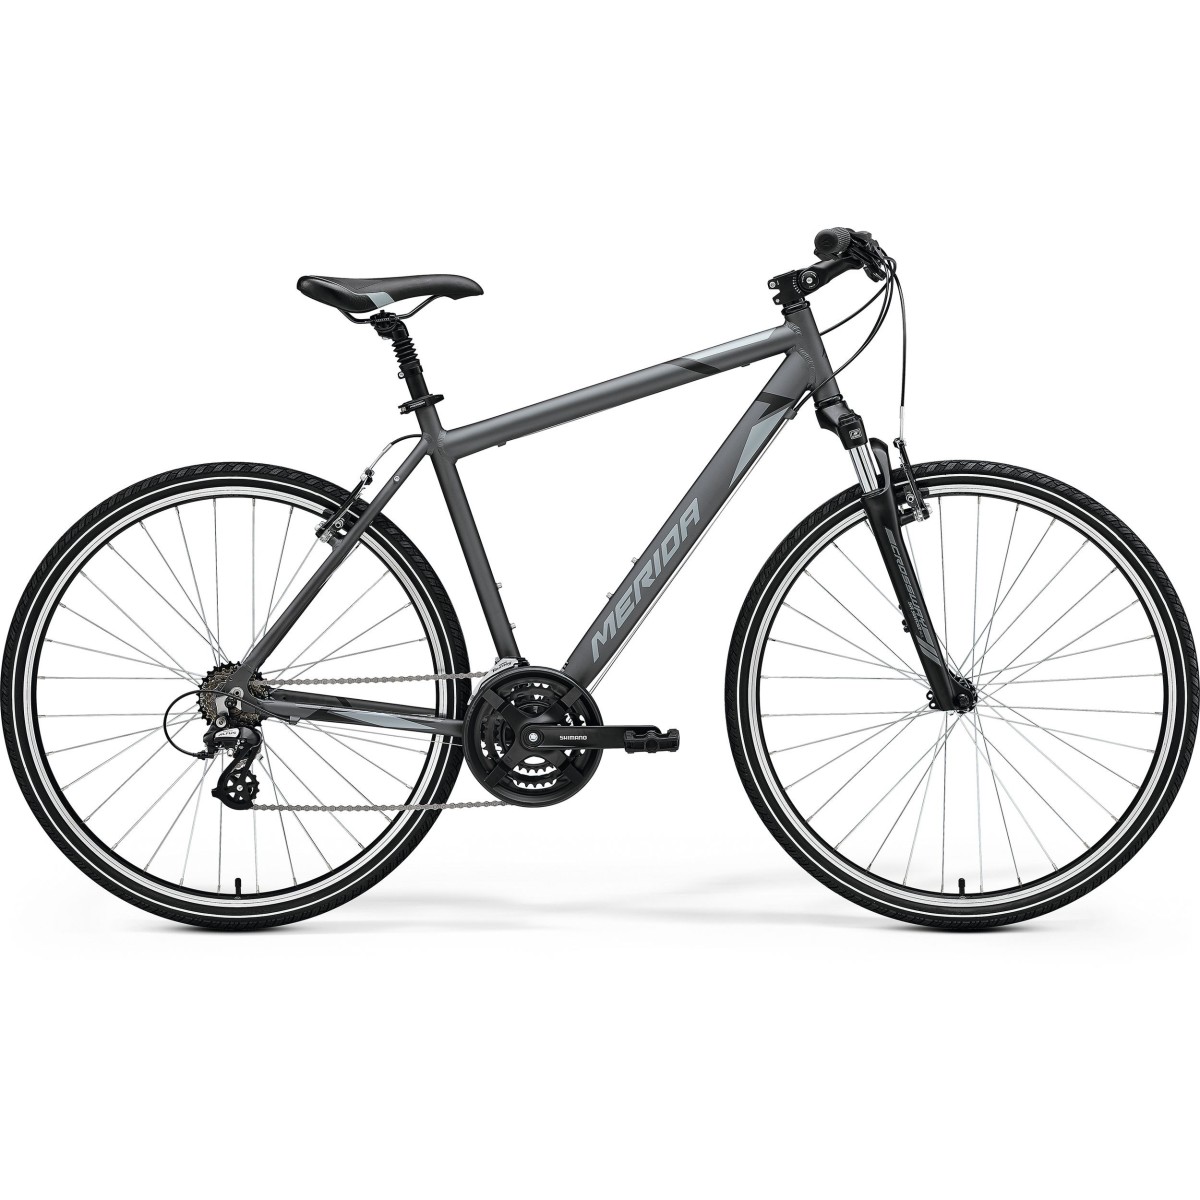 MERIDA CROSSWAY 10 bicycle - grey